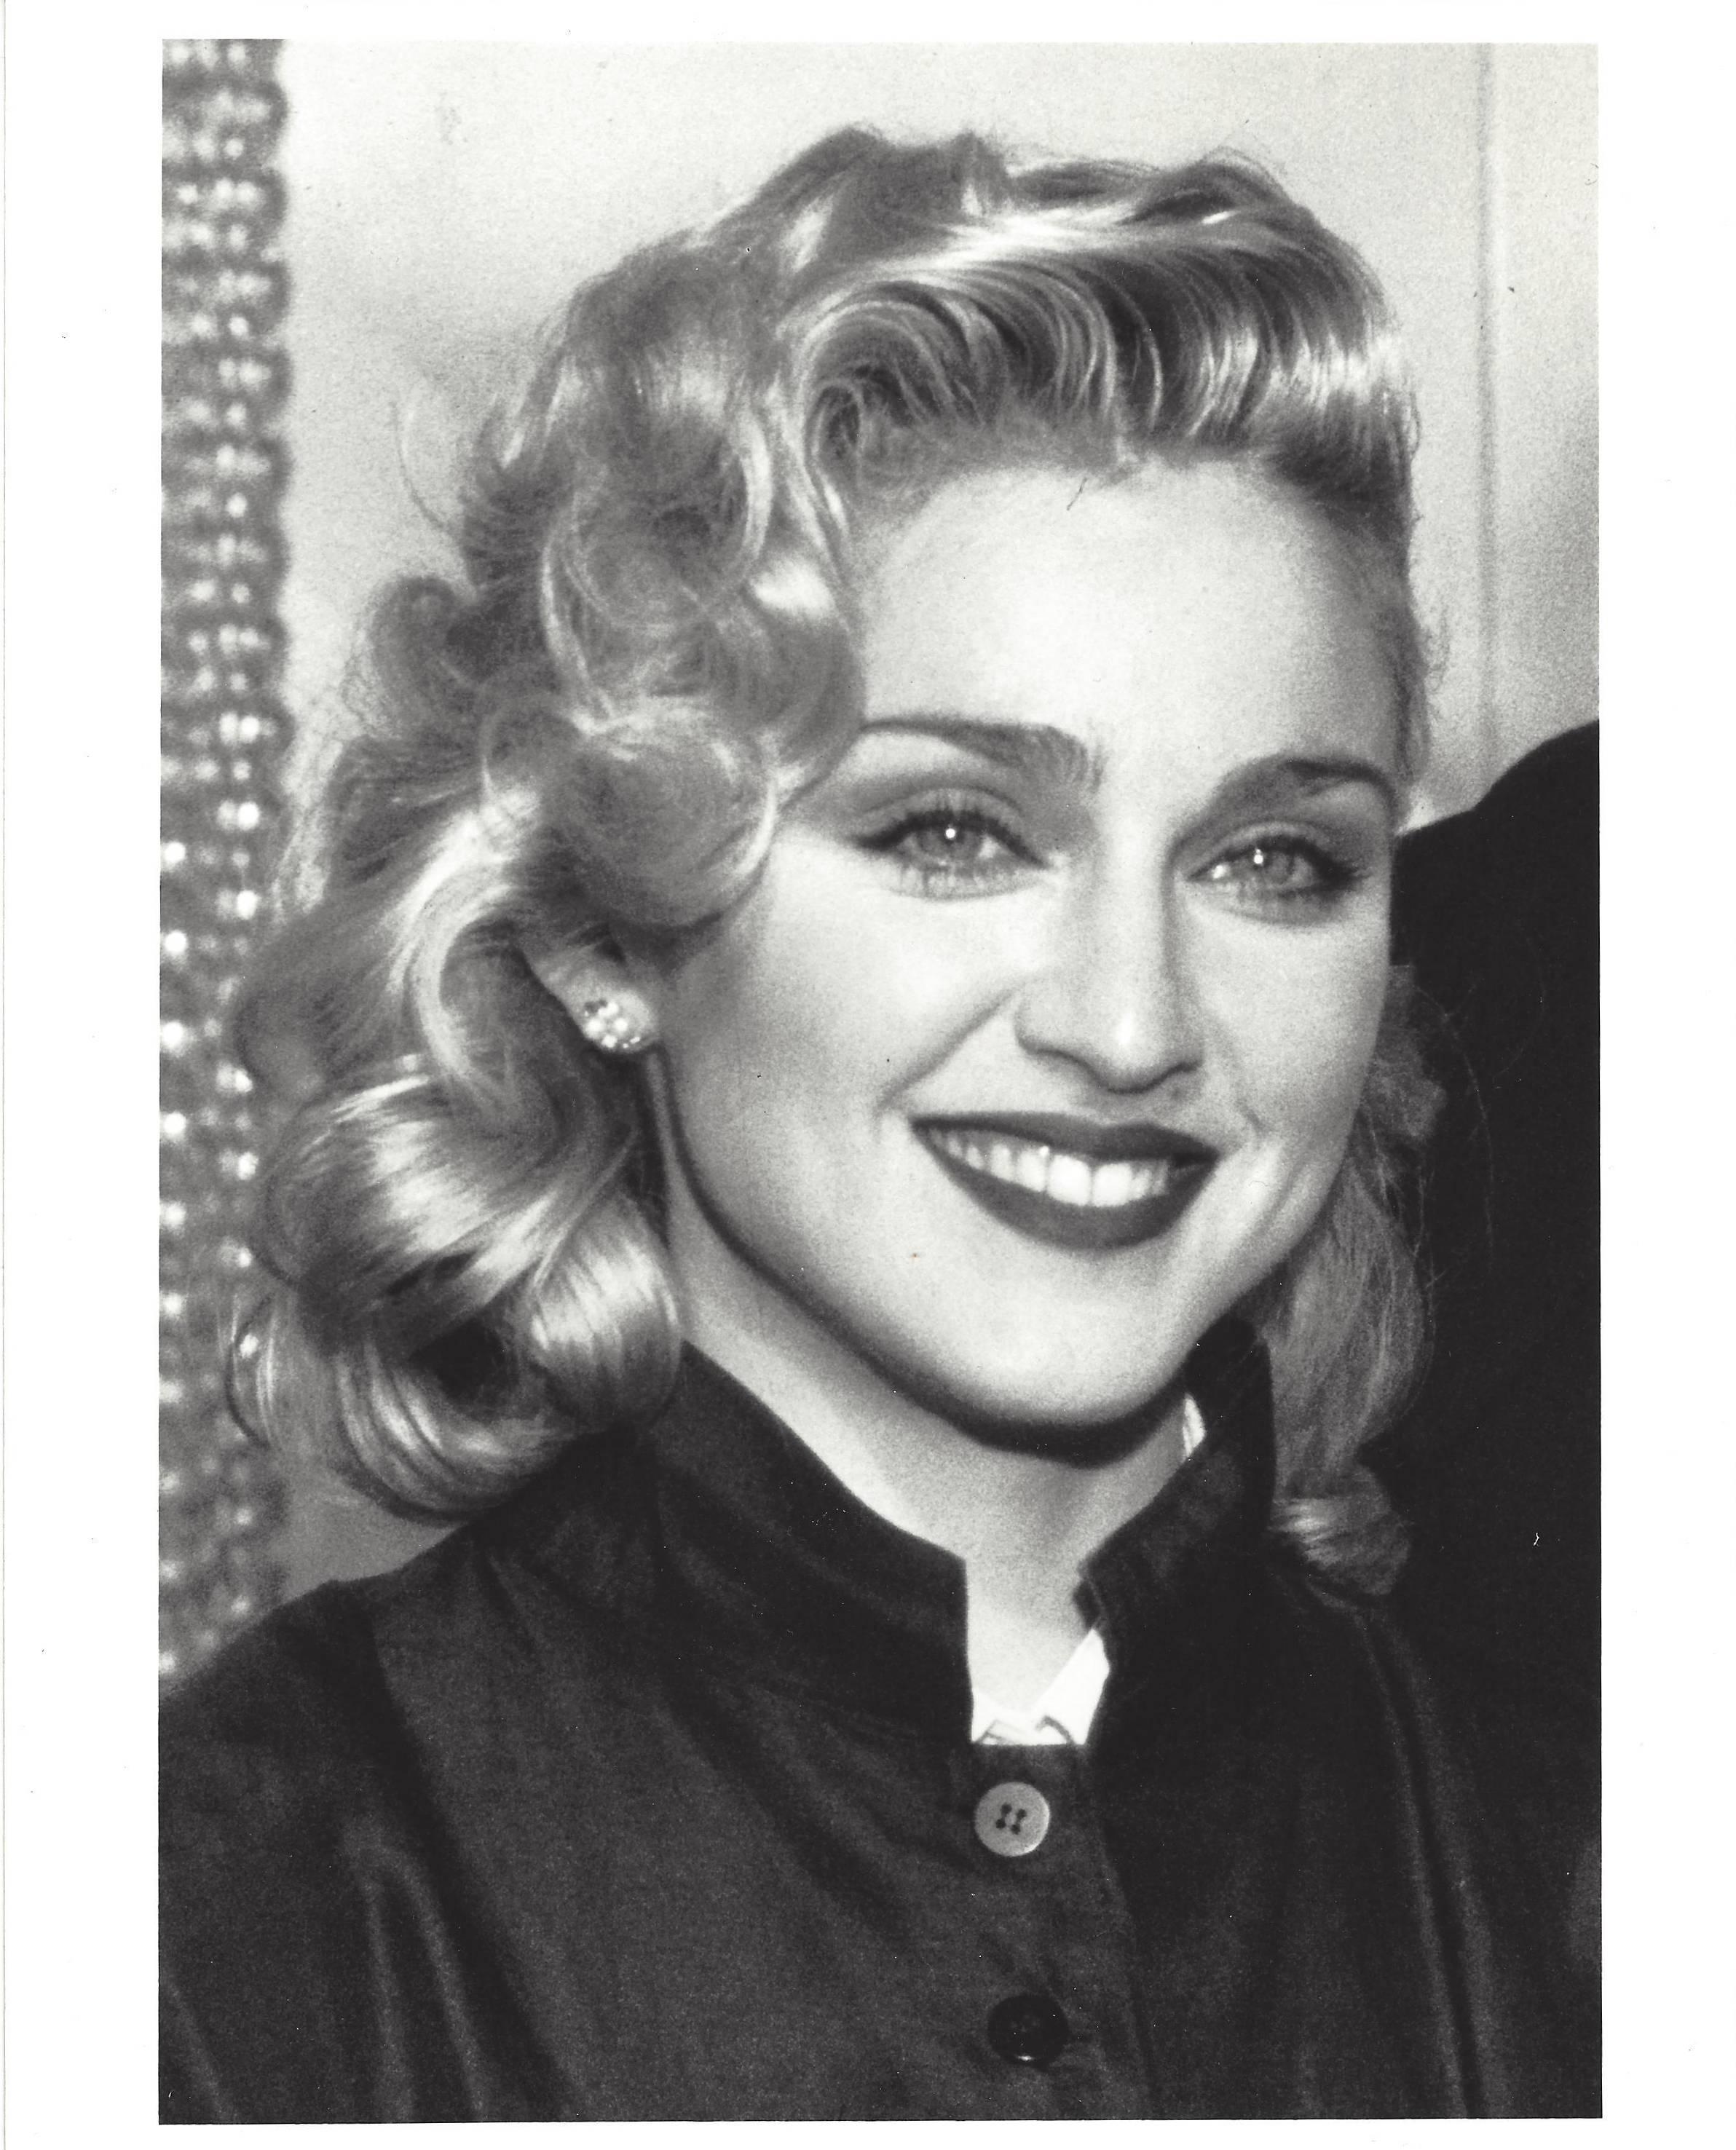 Adrian Boot Black and White Photograph - Madonna Head and Shoulders Portrait Vintage Original Photograph